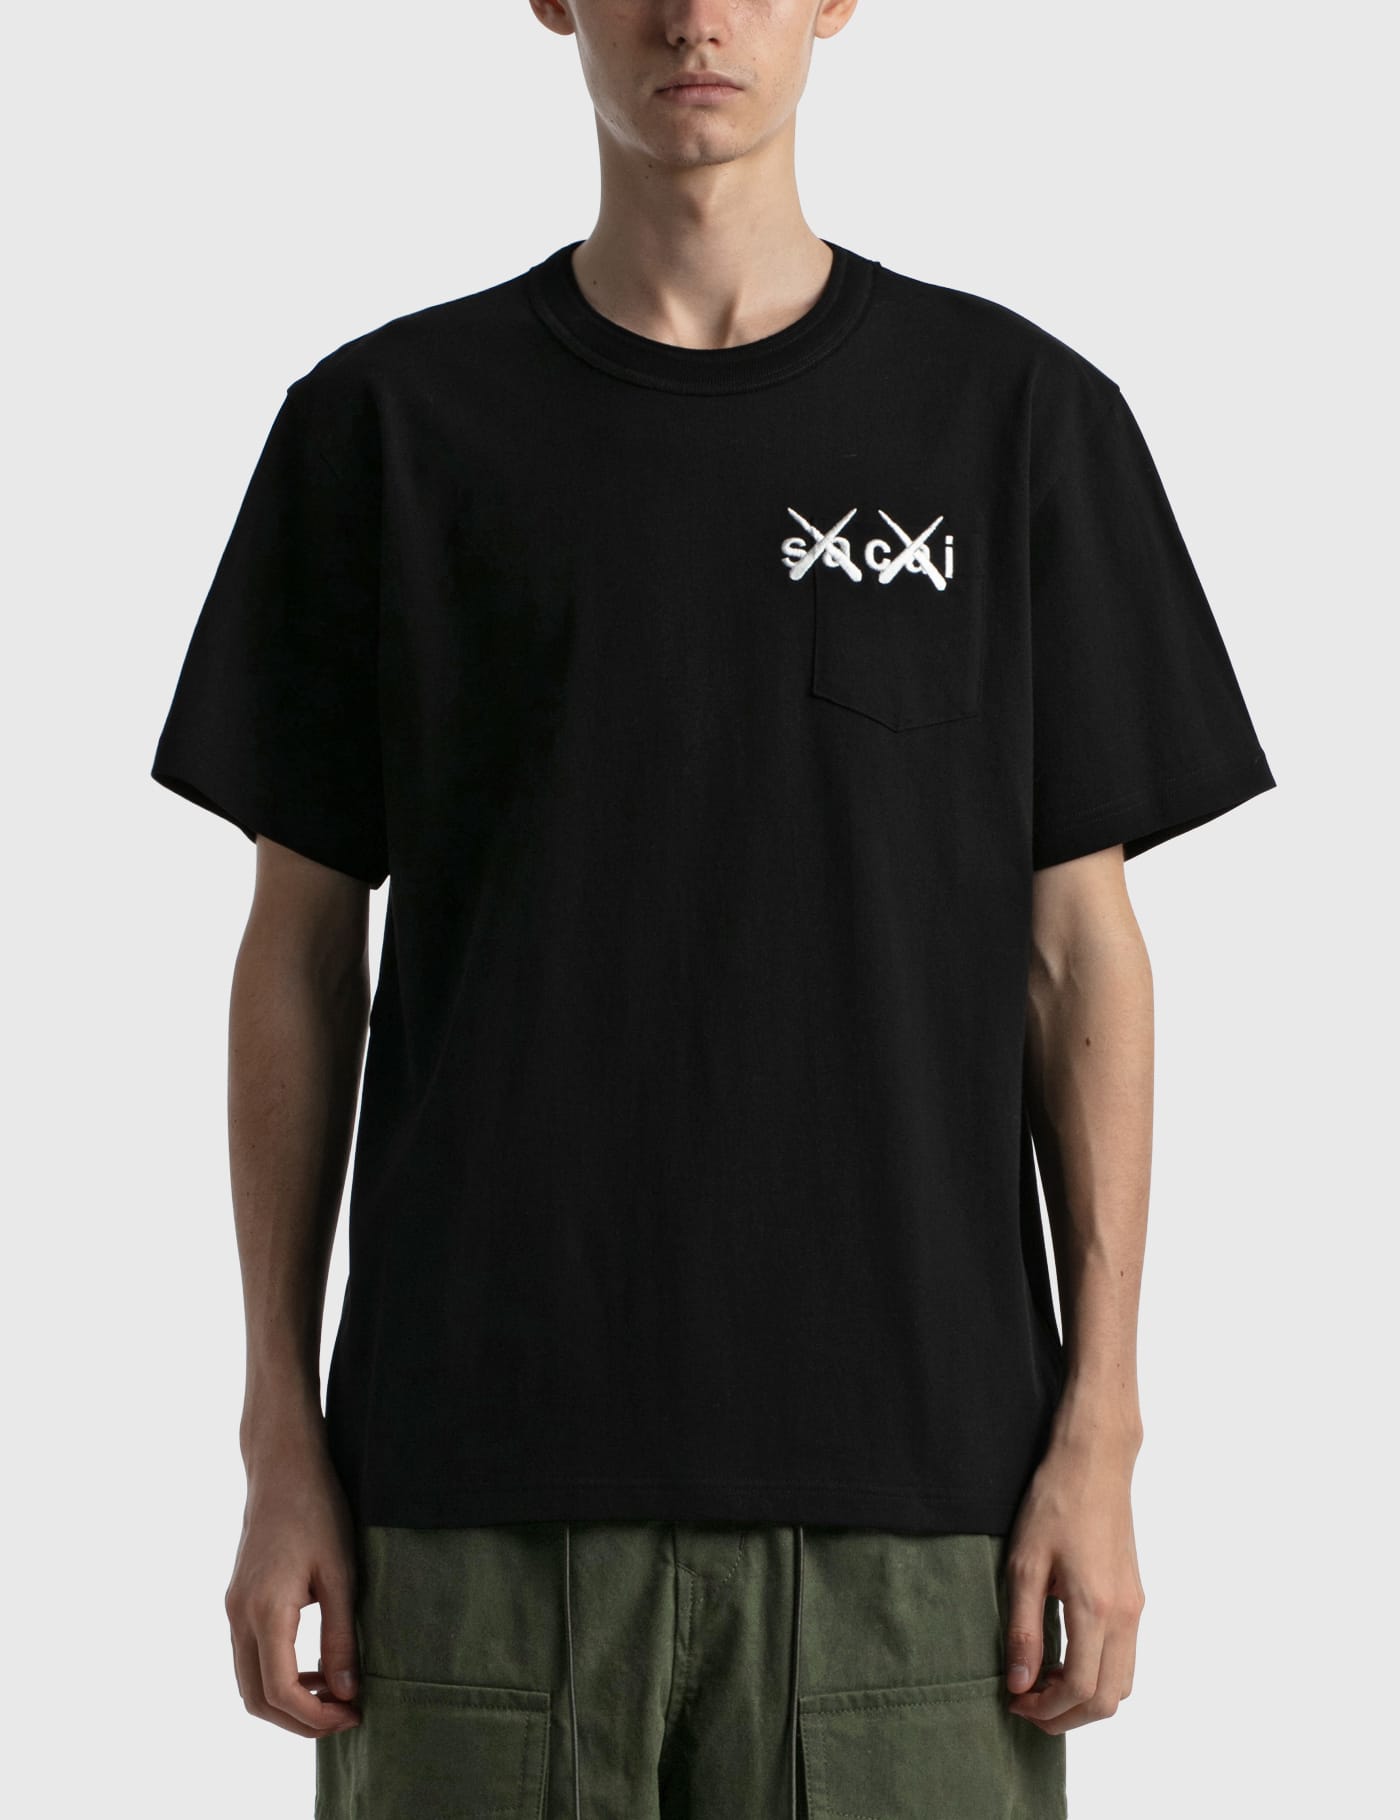 Sacai - KAWS Embroidery T-shirt | HBX - HYPEBEAST 為您搜羅全球潮流時尚品牌